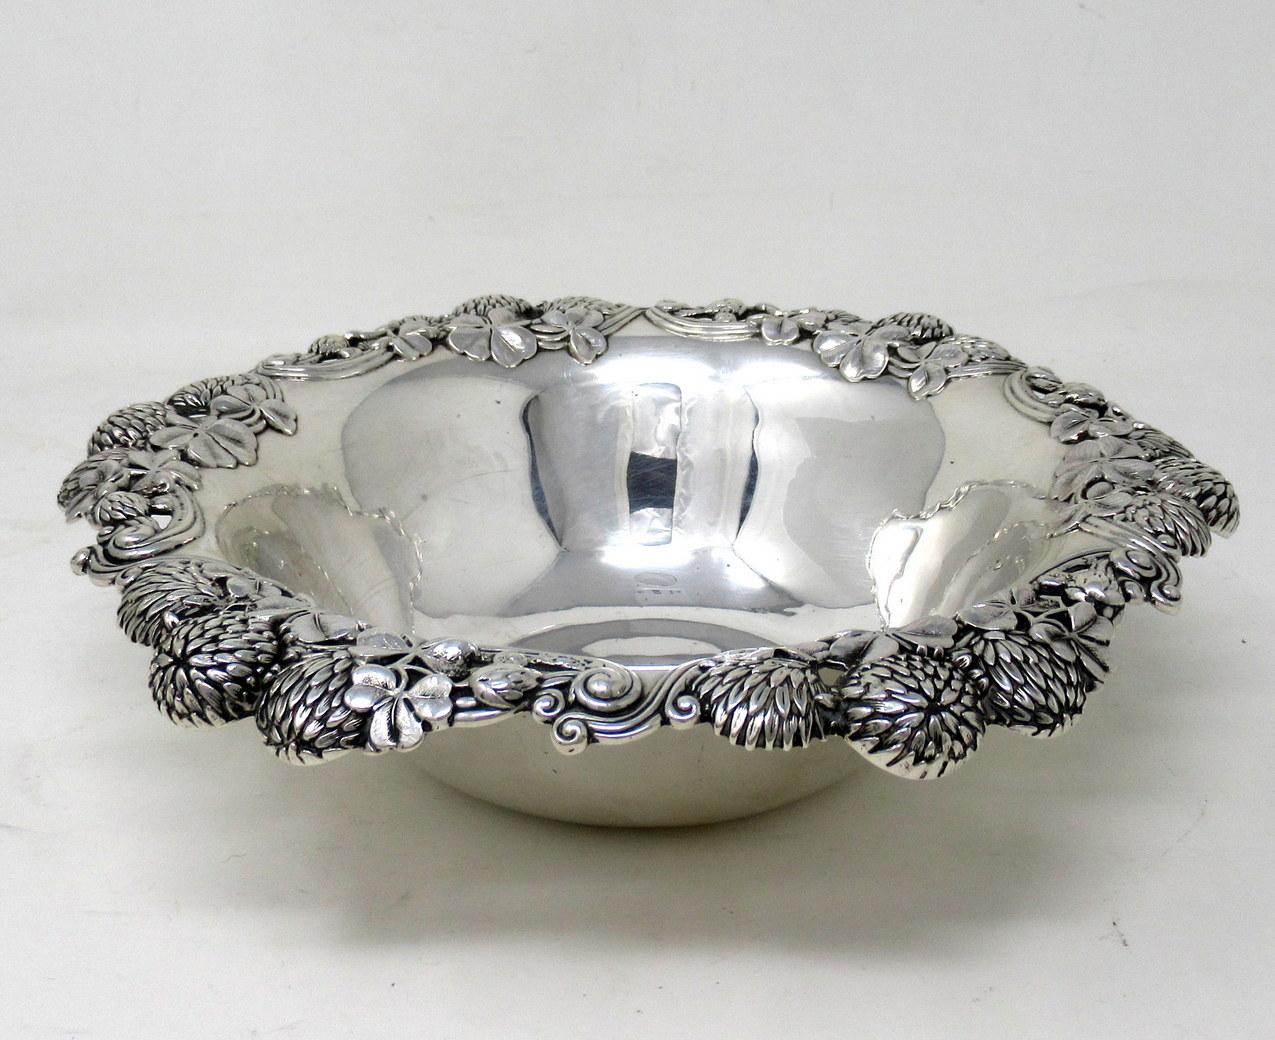 Cast Antique Tiffany American Art Nouveau Sterling Silver Bowl Centerpiece Shamrock